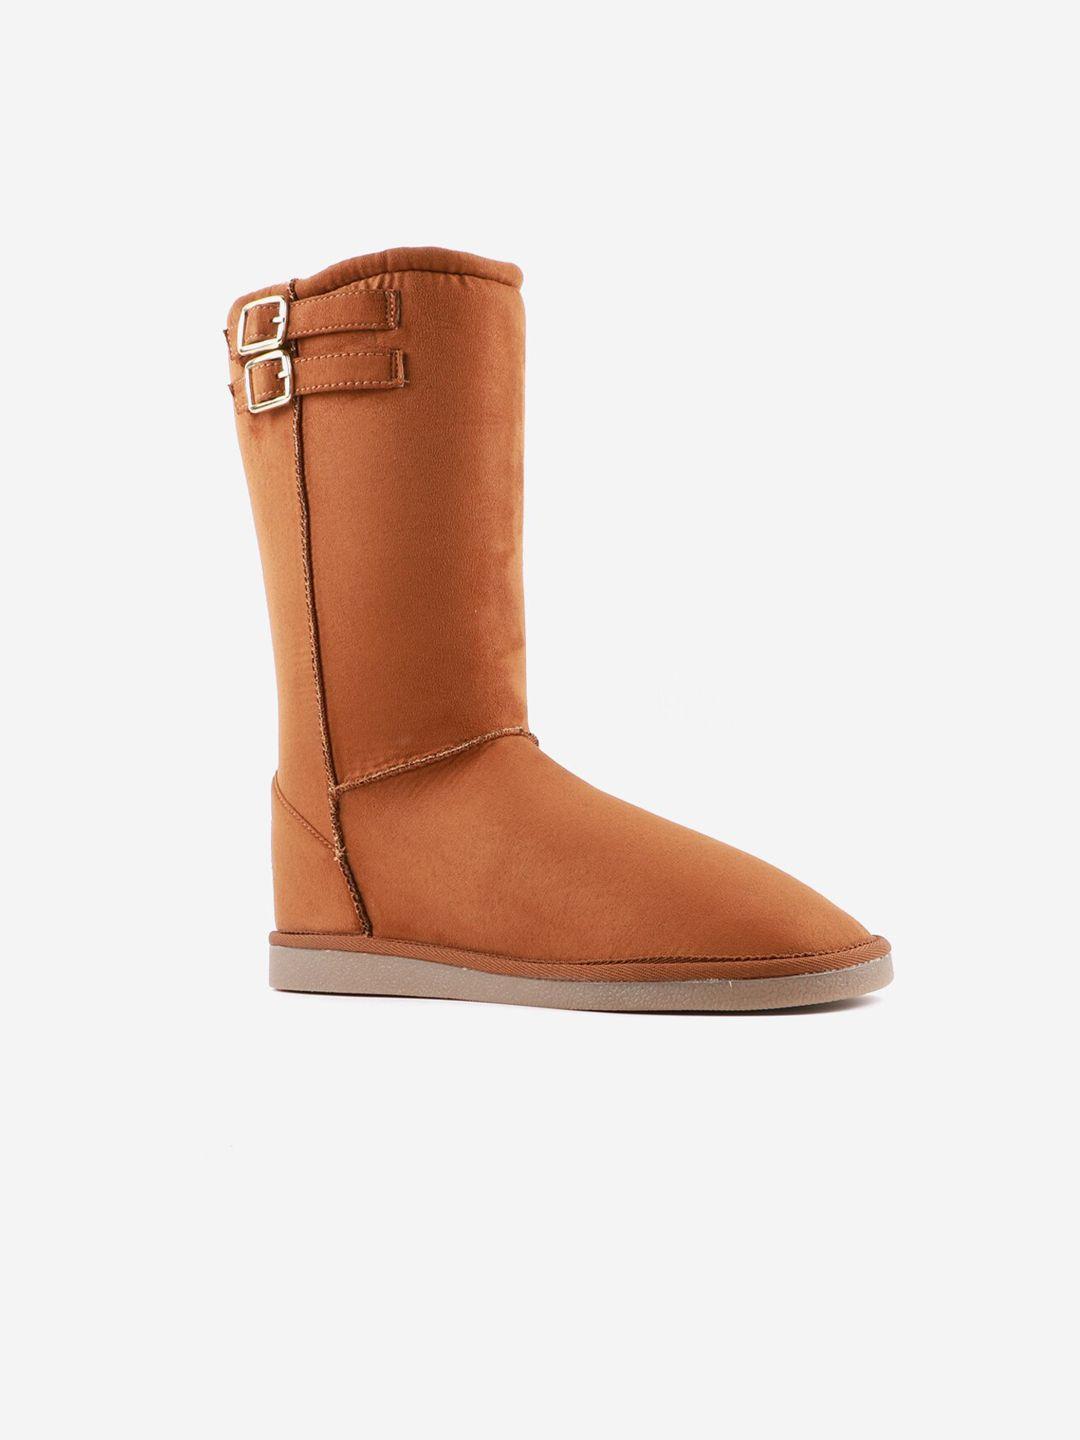 carlton london women tan brown leather flat boots